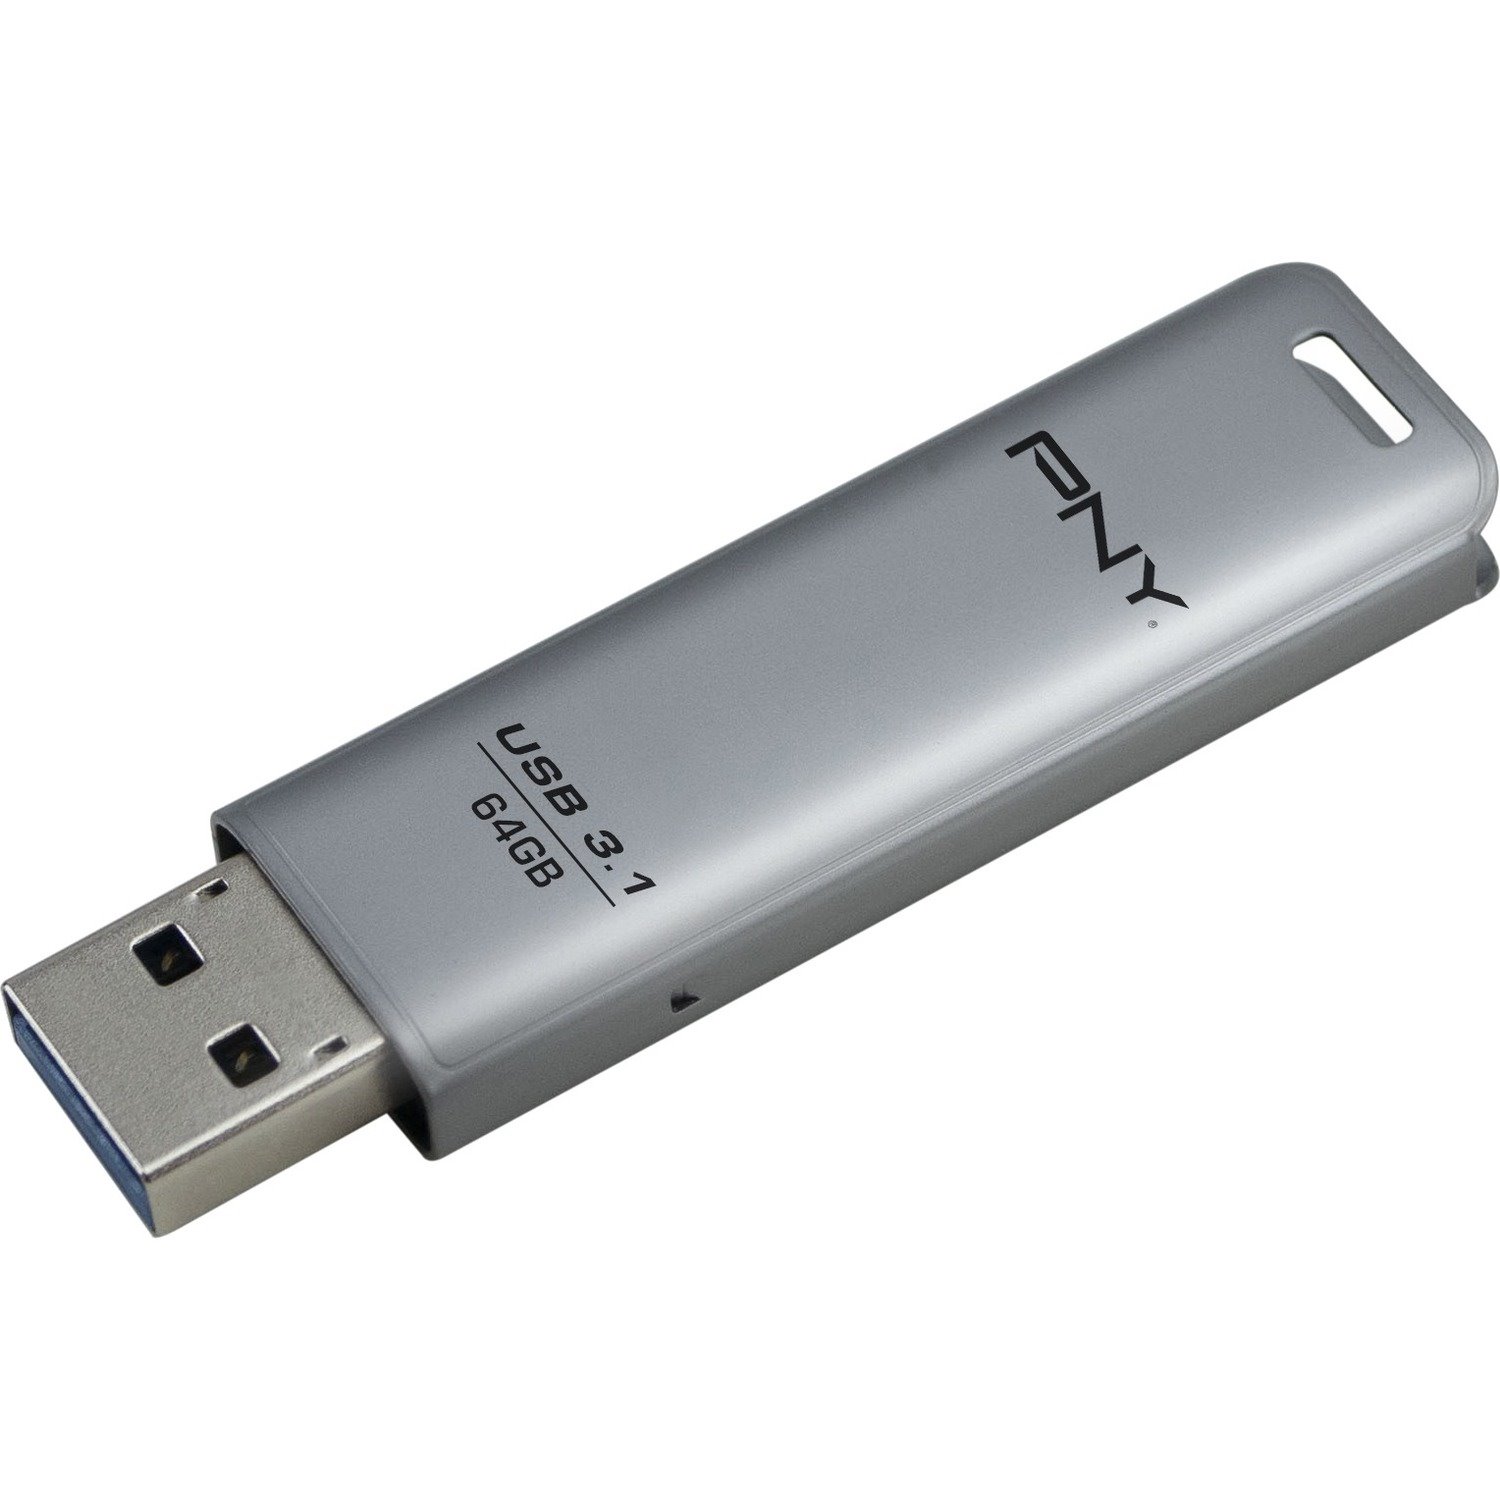 PNY Elite Steel 3.1 64 GB USB 3.1 Flash Drive - Stainless Steel